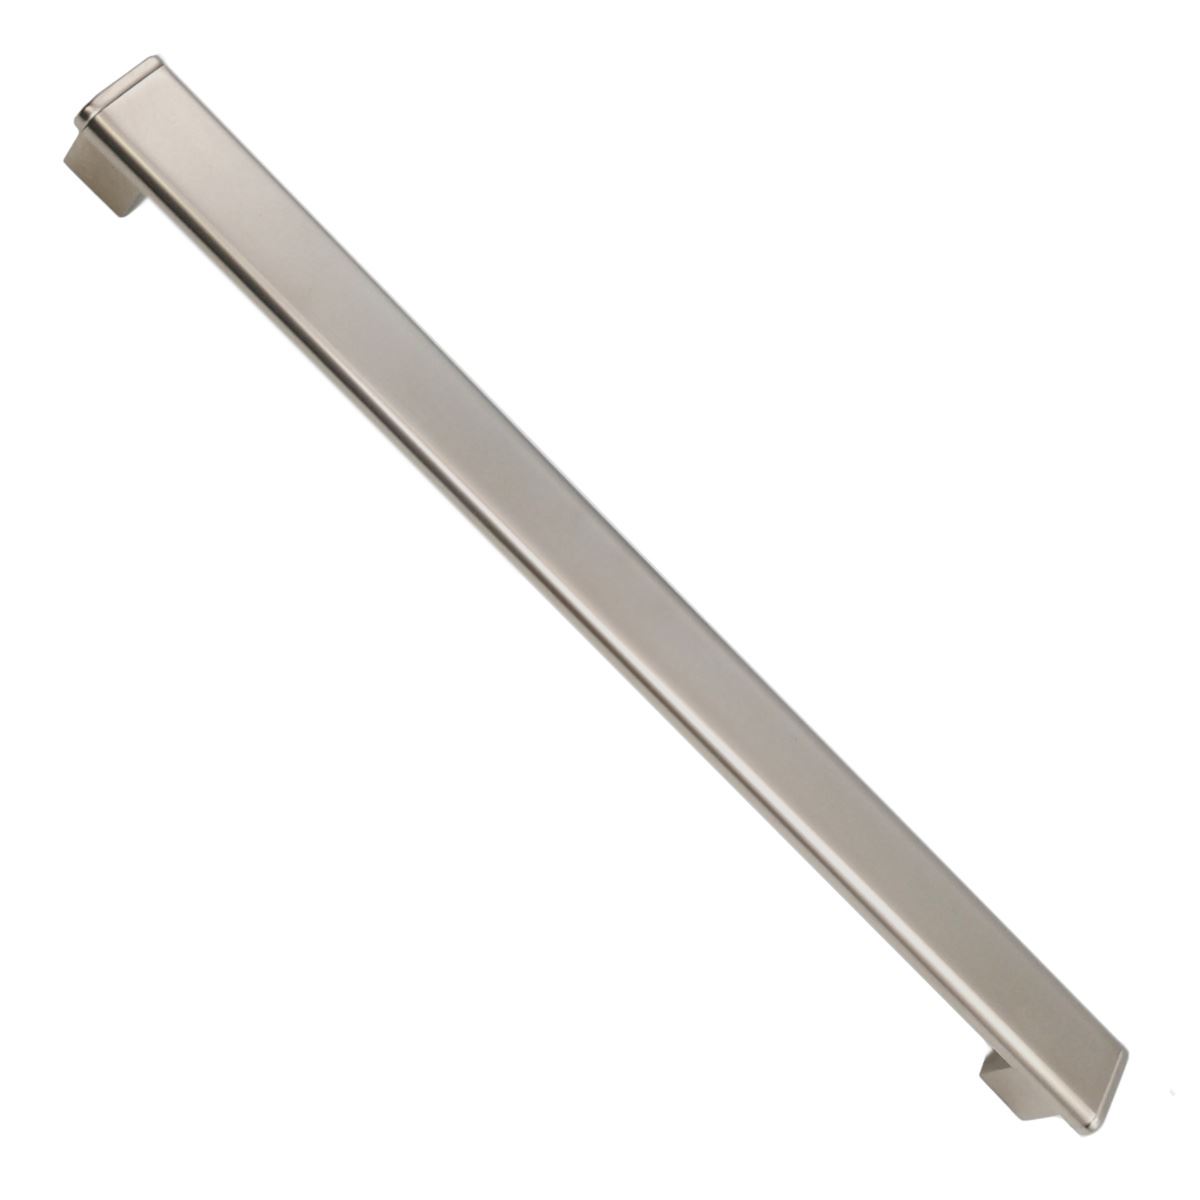 Schaub Tenor Cabinet Bar Pull 15 1/8" (384mm) Ctr Satin Nickel 245-384-15